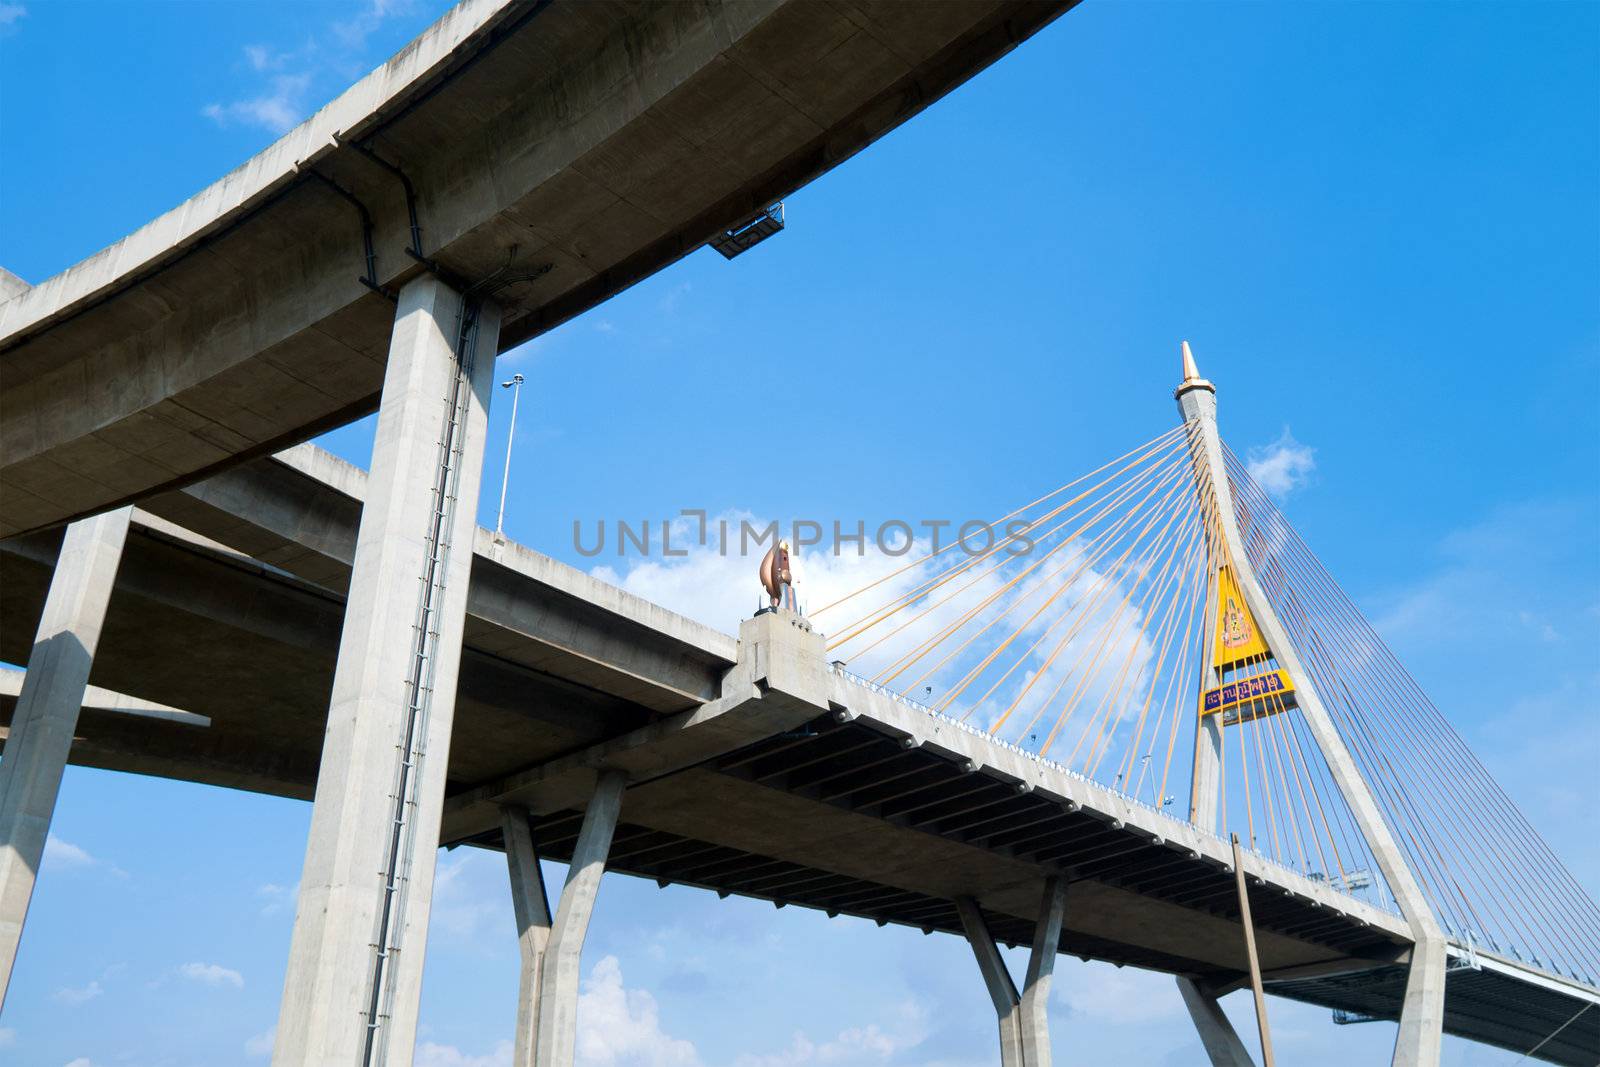 Bhumibol Bridge in Thailand,The bridge crosses the Chao Phraya River twice. (public transportation bridge no trademark)